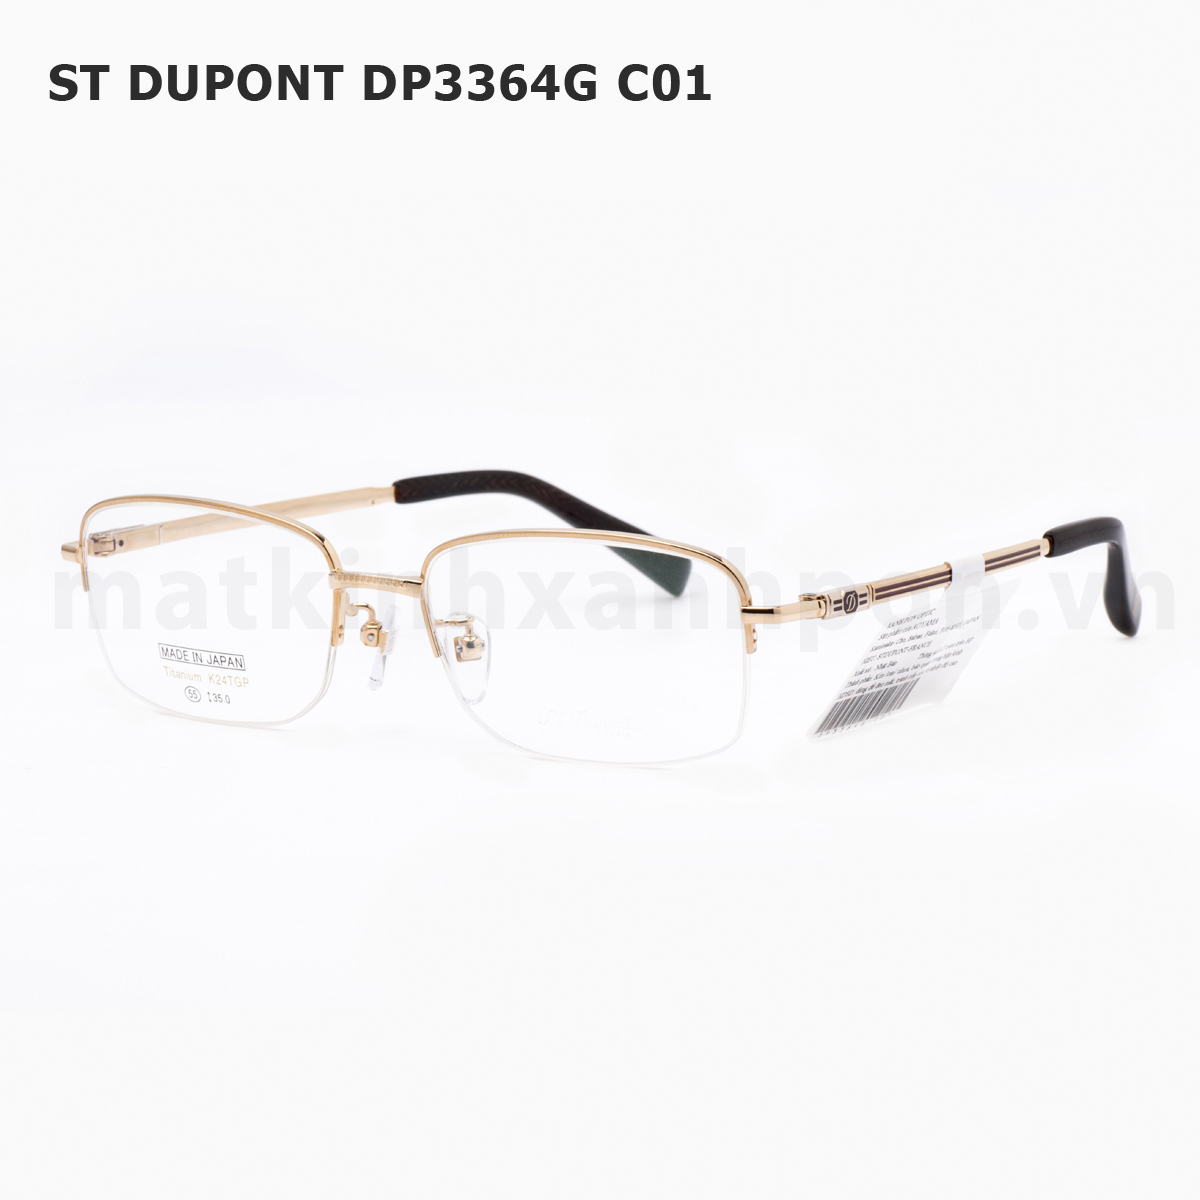 ST Dupont DP3364G C01